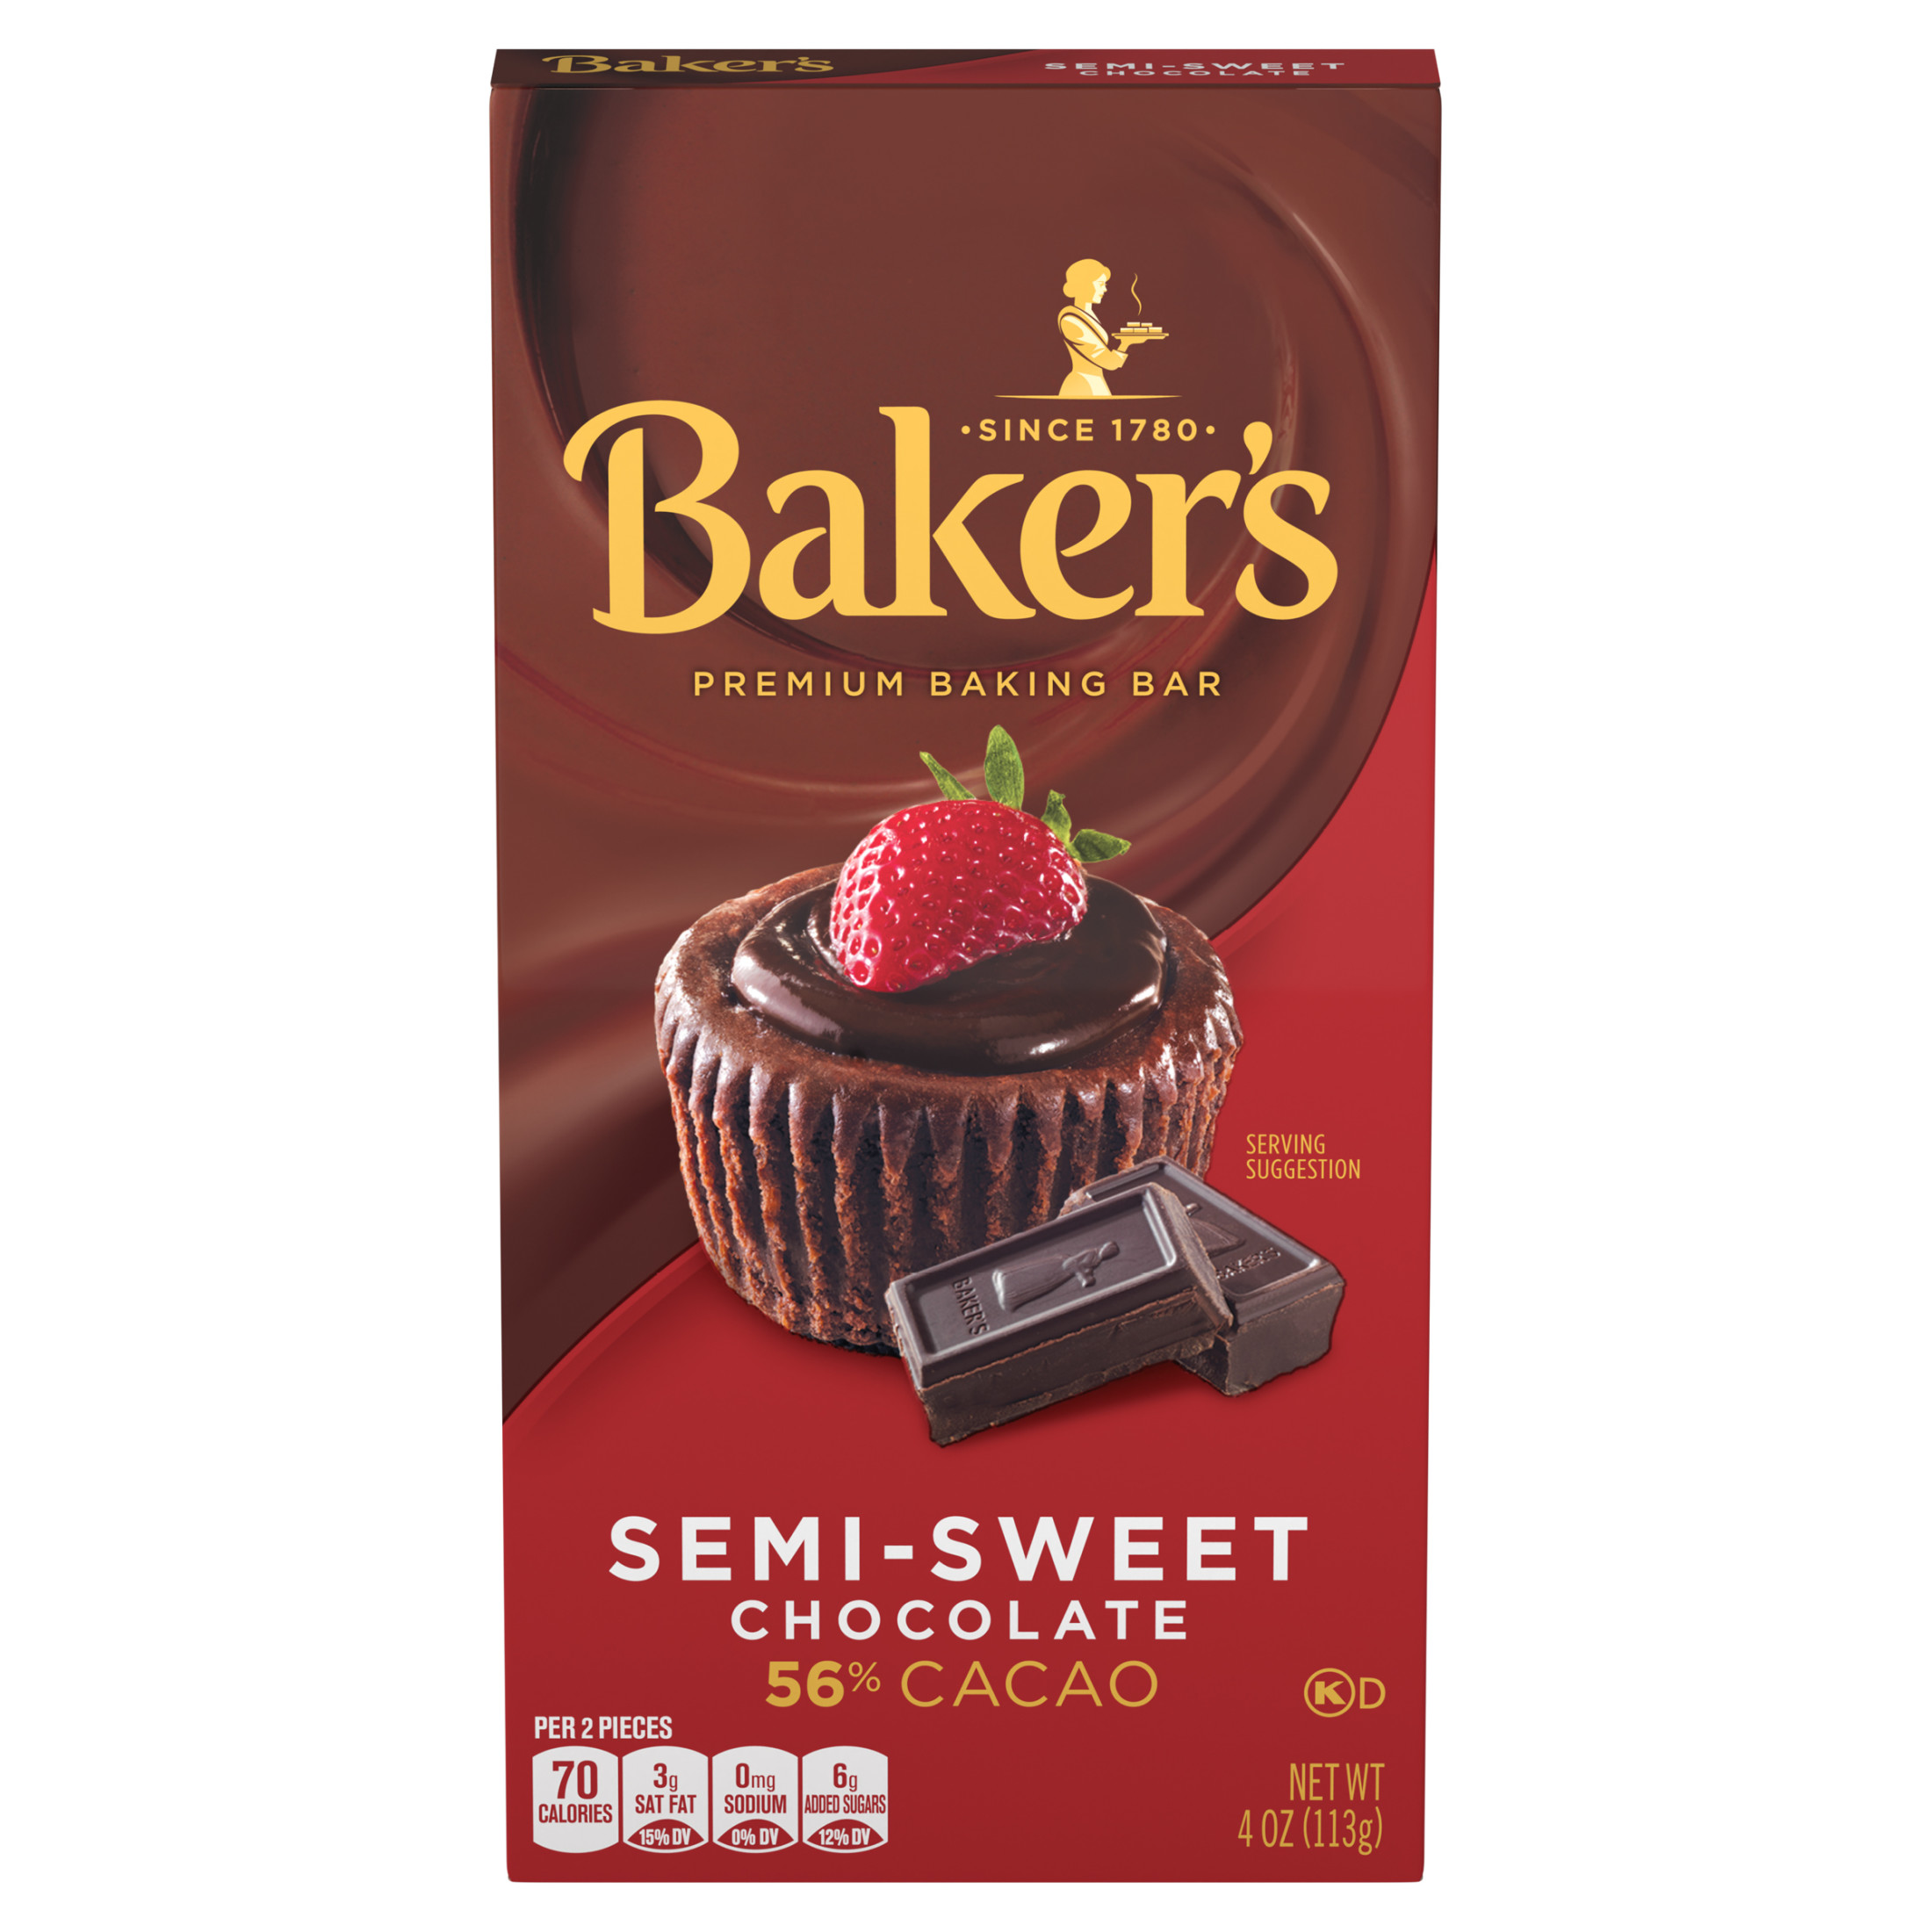 Baker's Semi-Sweet Chocolate Premium Baking Bar with 56% Cacao, 4 oz Box - image 1 of 11